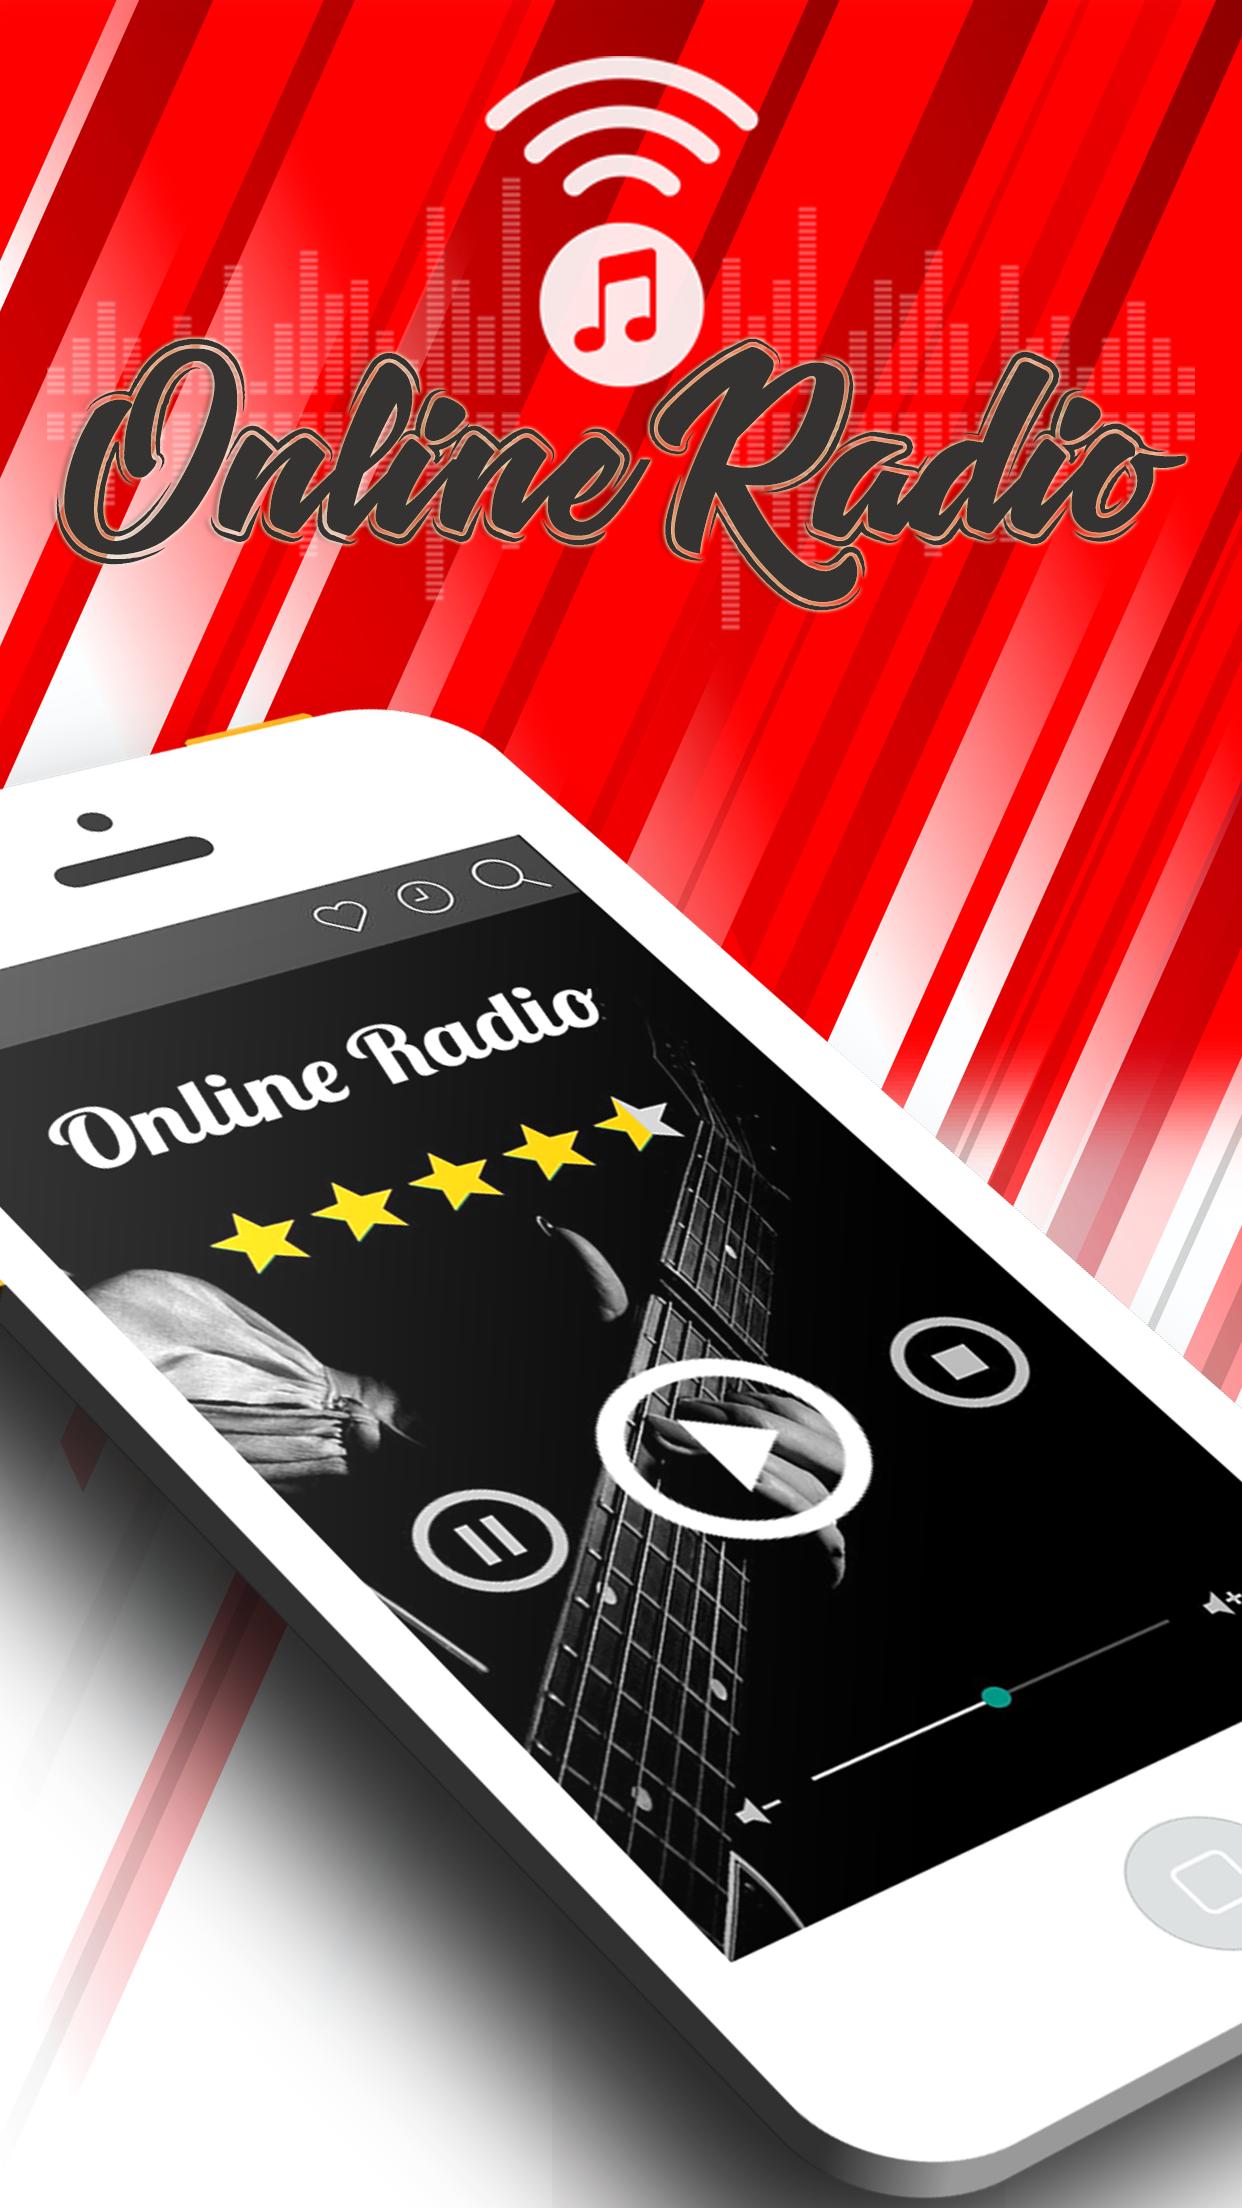 Radio Warna 94.2 App Free Singapore Internet Radio APK for Android Download